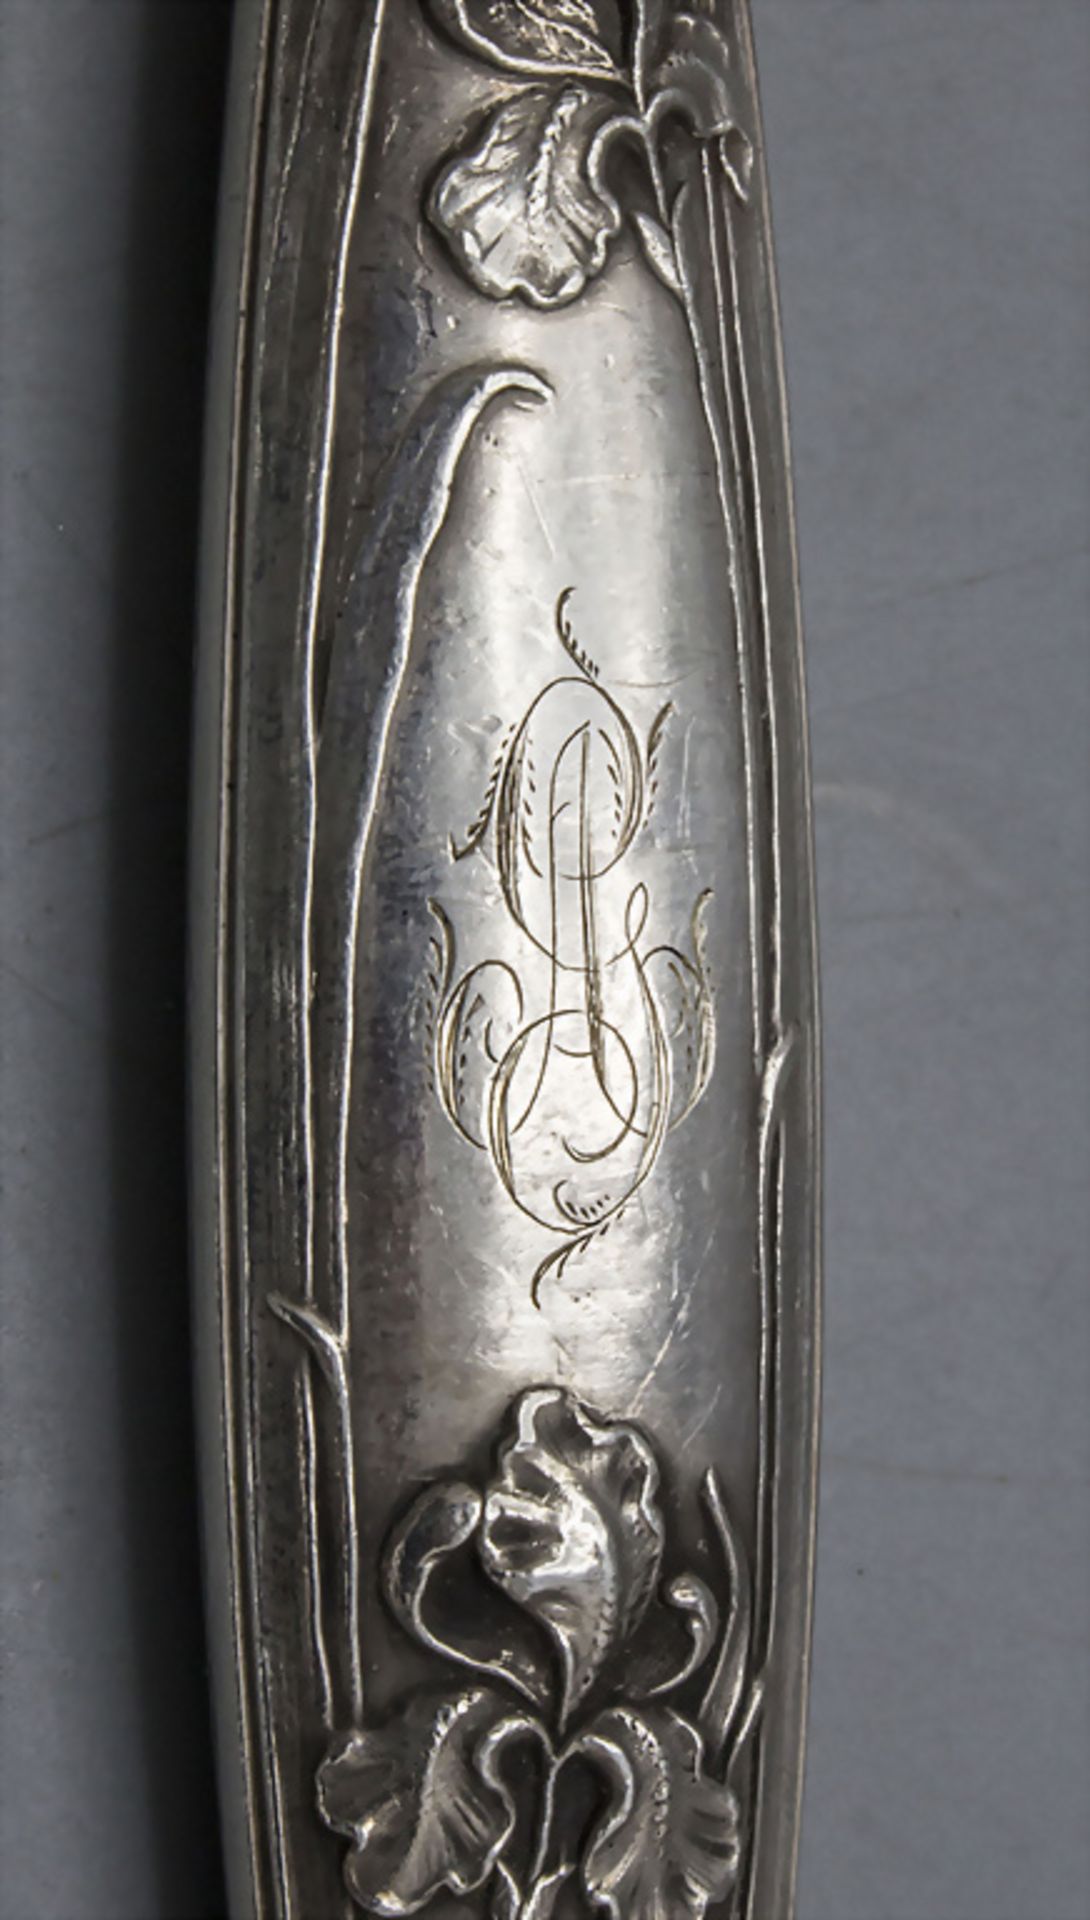 10 Jugendstil Messer mit Schwertlilien / 10 Art Nouveau silver knives with lilies, Louis ... - Image 4 of 4